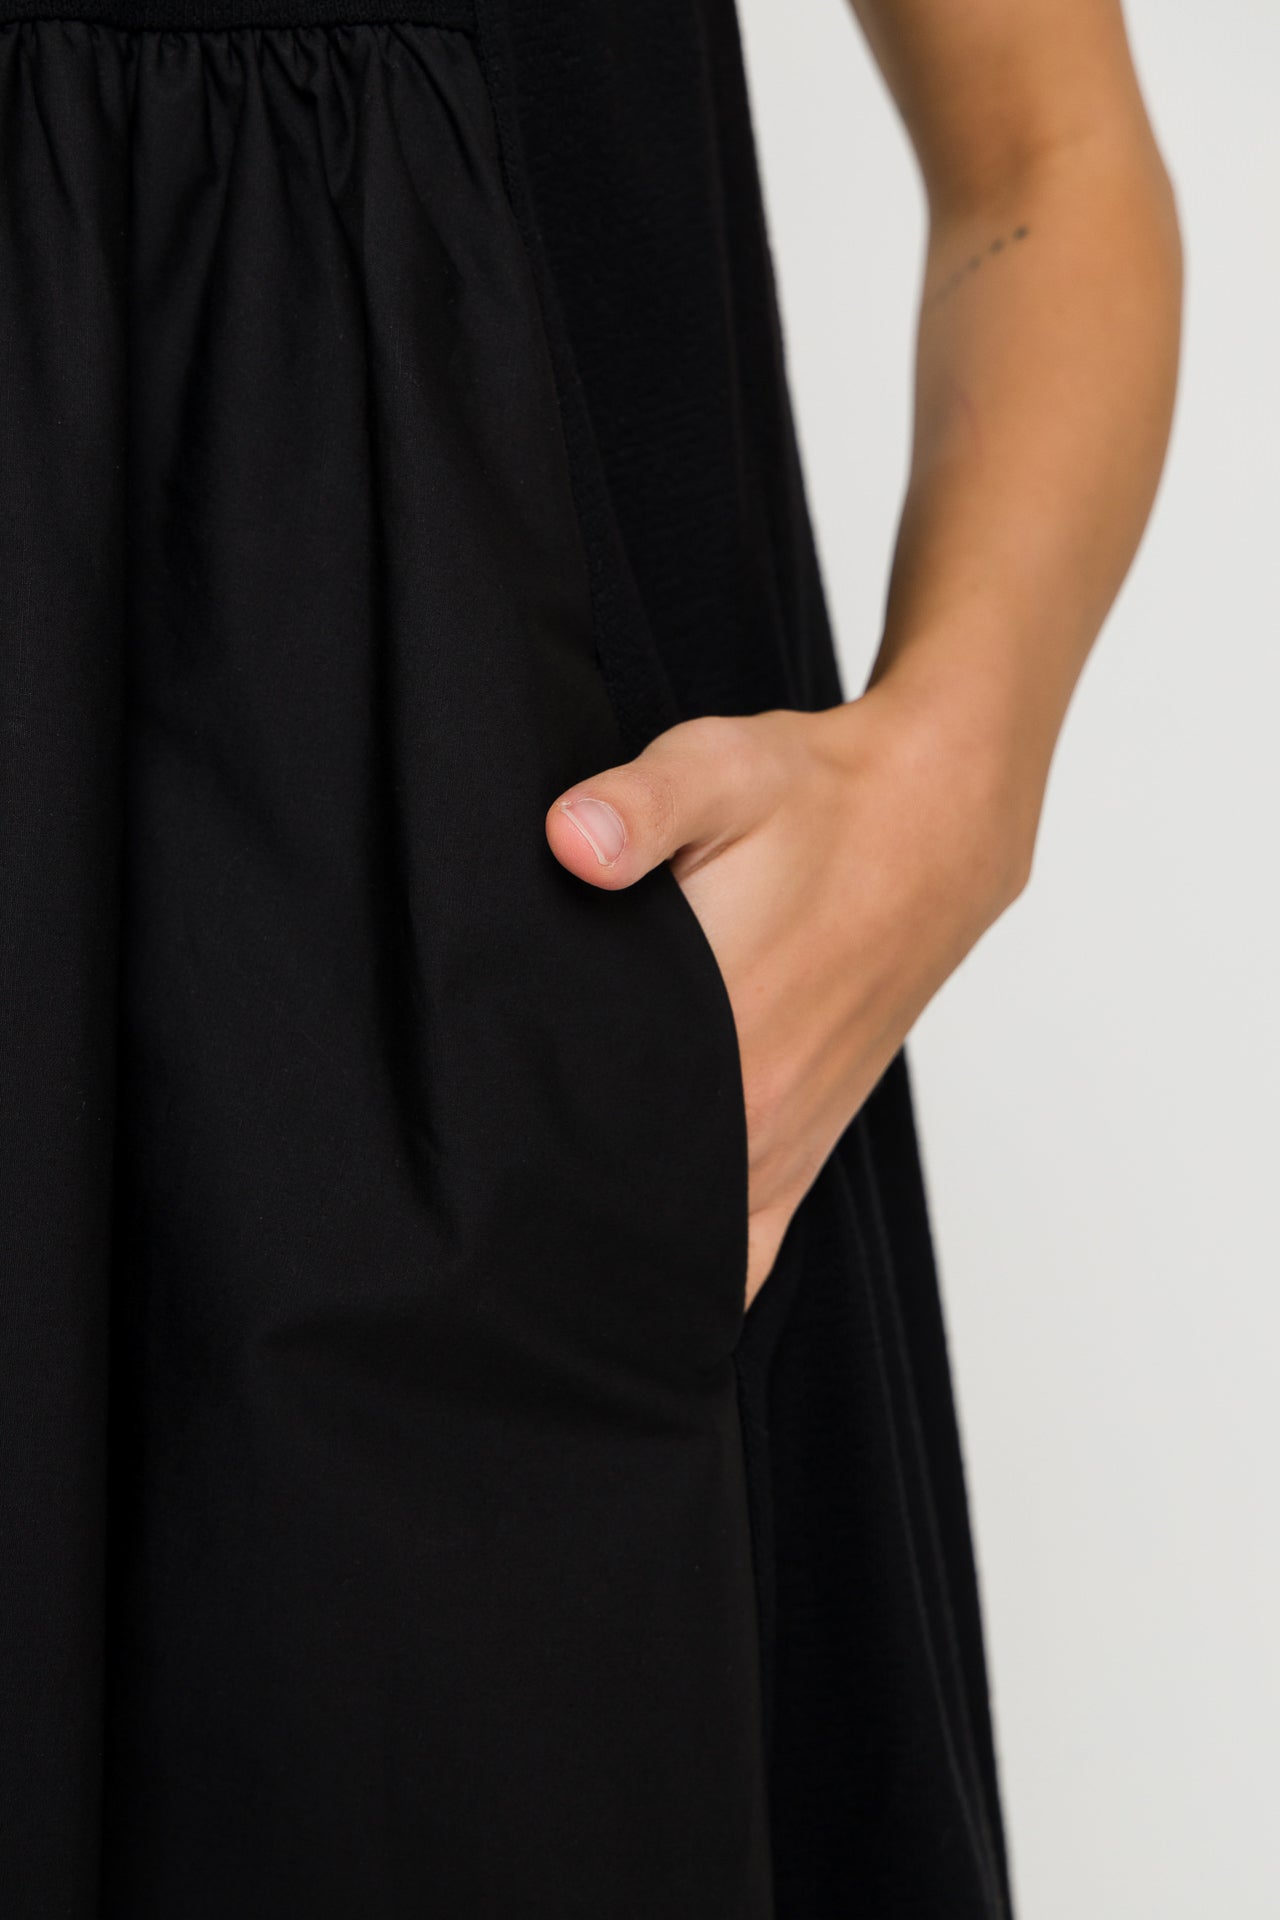 ENGLISH FACTORY - Mixed Media Ruffle Sleeve Mini Dress - DRESSES available at Objectrare